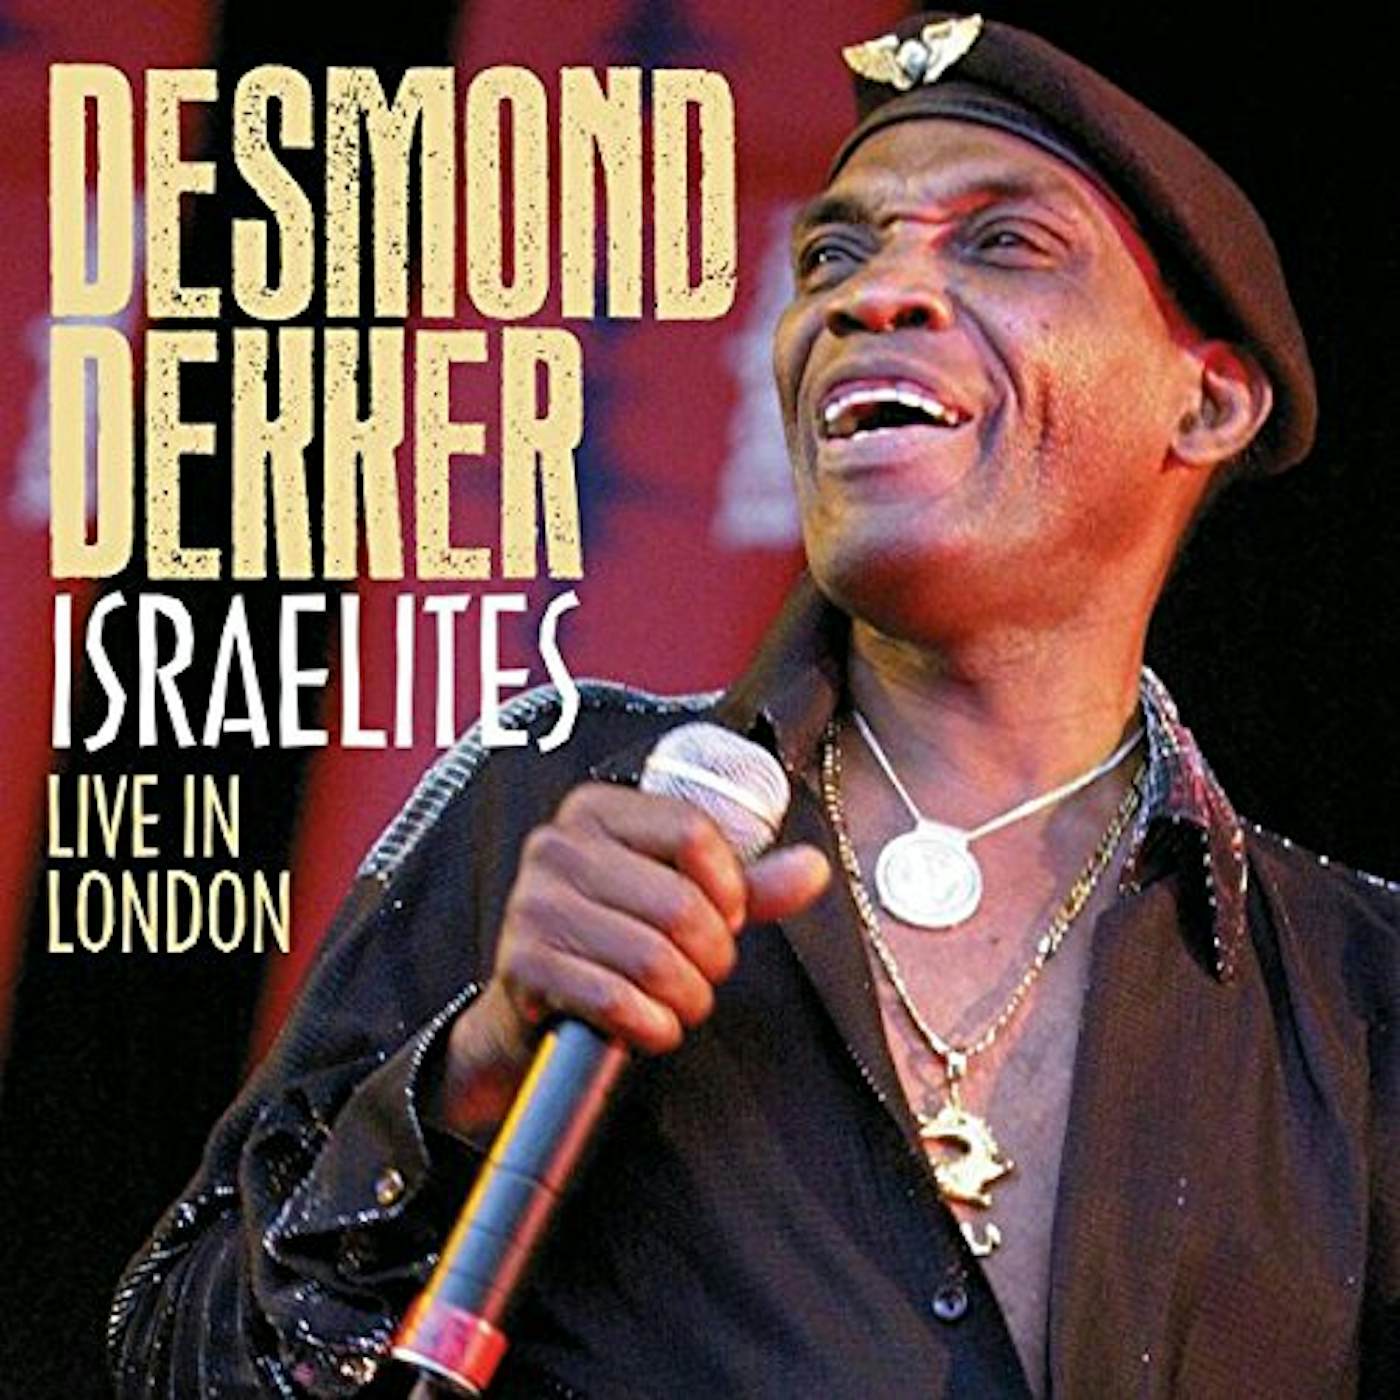 Desmond Dekker ISRAELITES LIVE IN LONDON CD